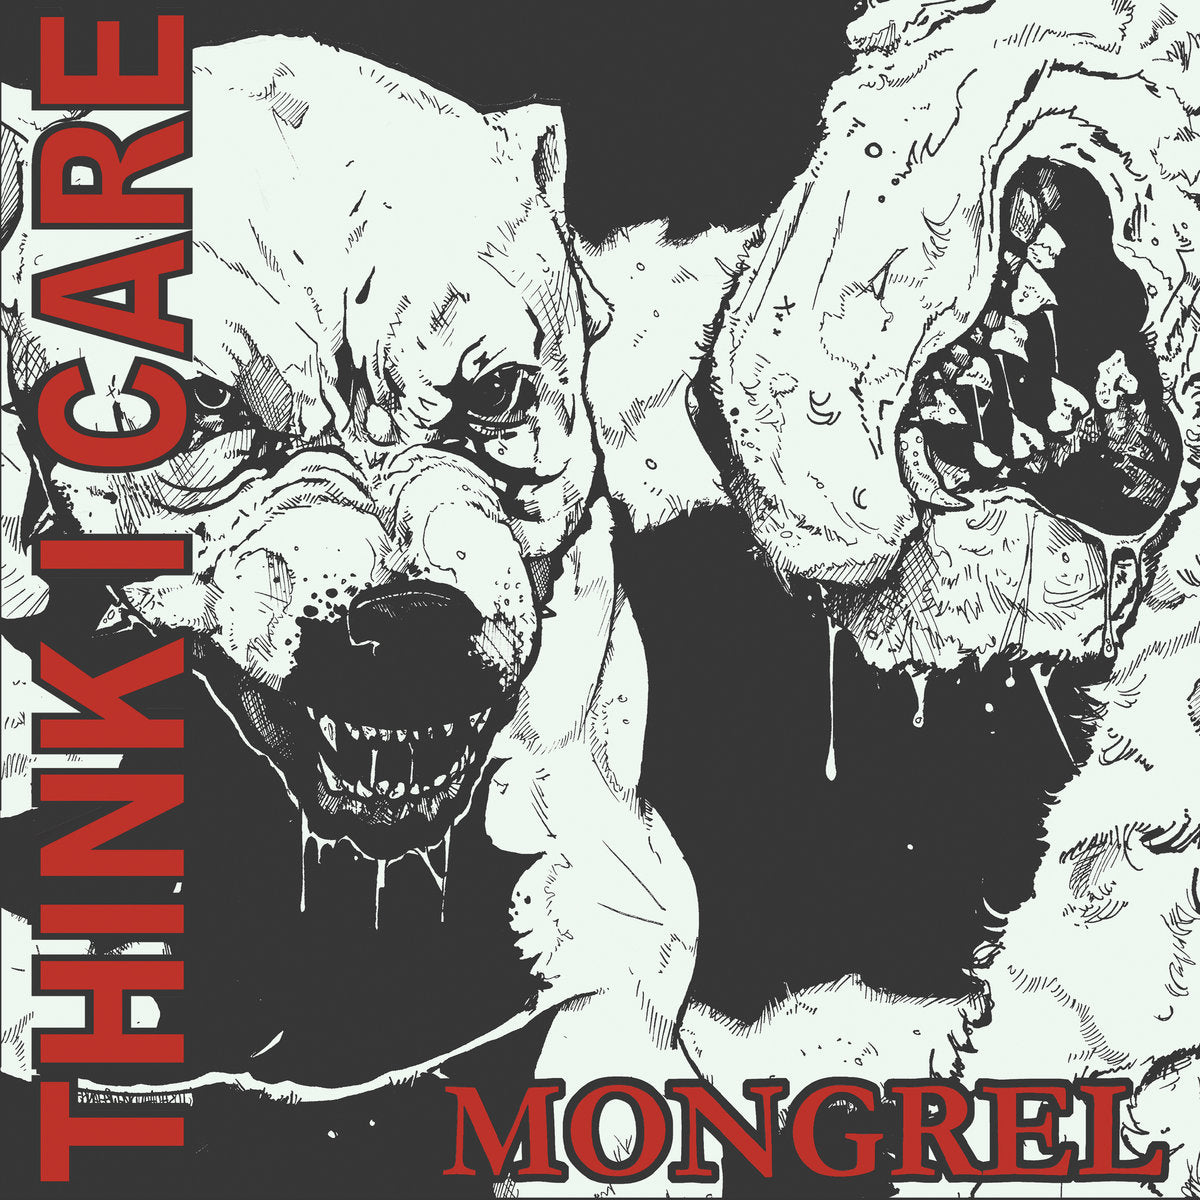 THINK I CARE "Mongrel" LP